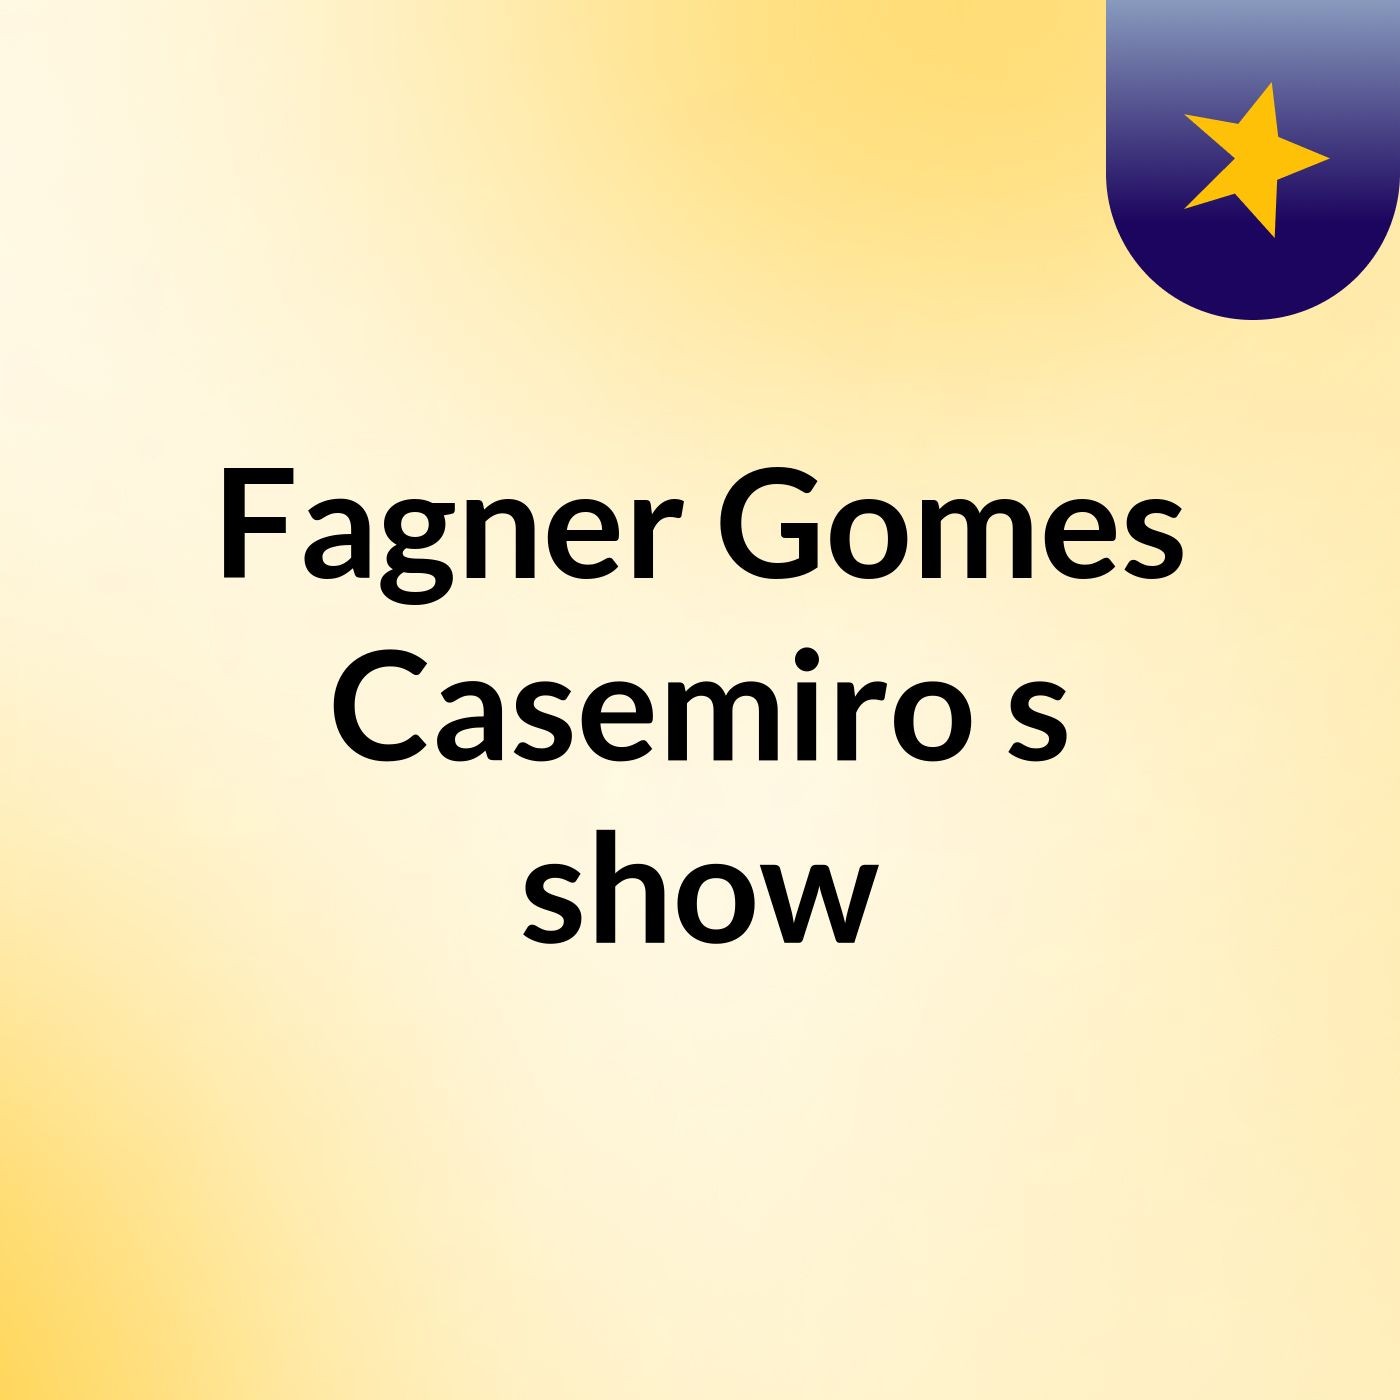 Fagner Gomes Casemiro's show